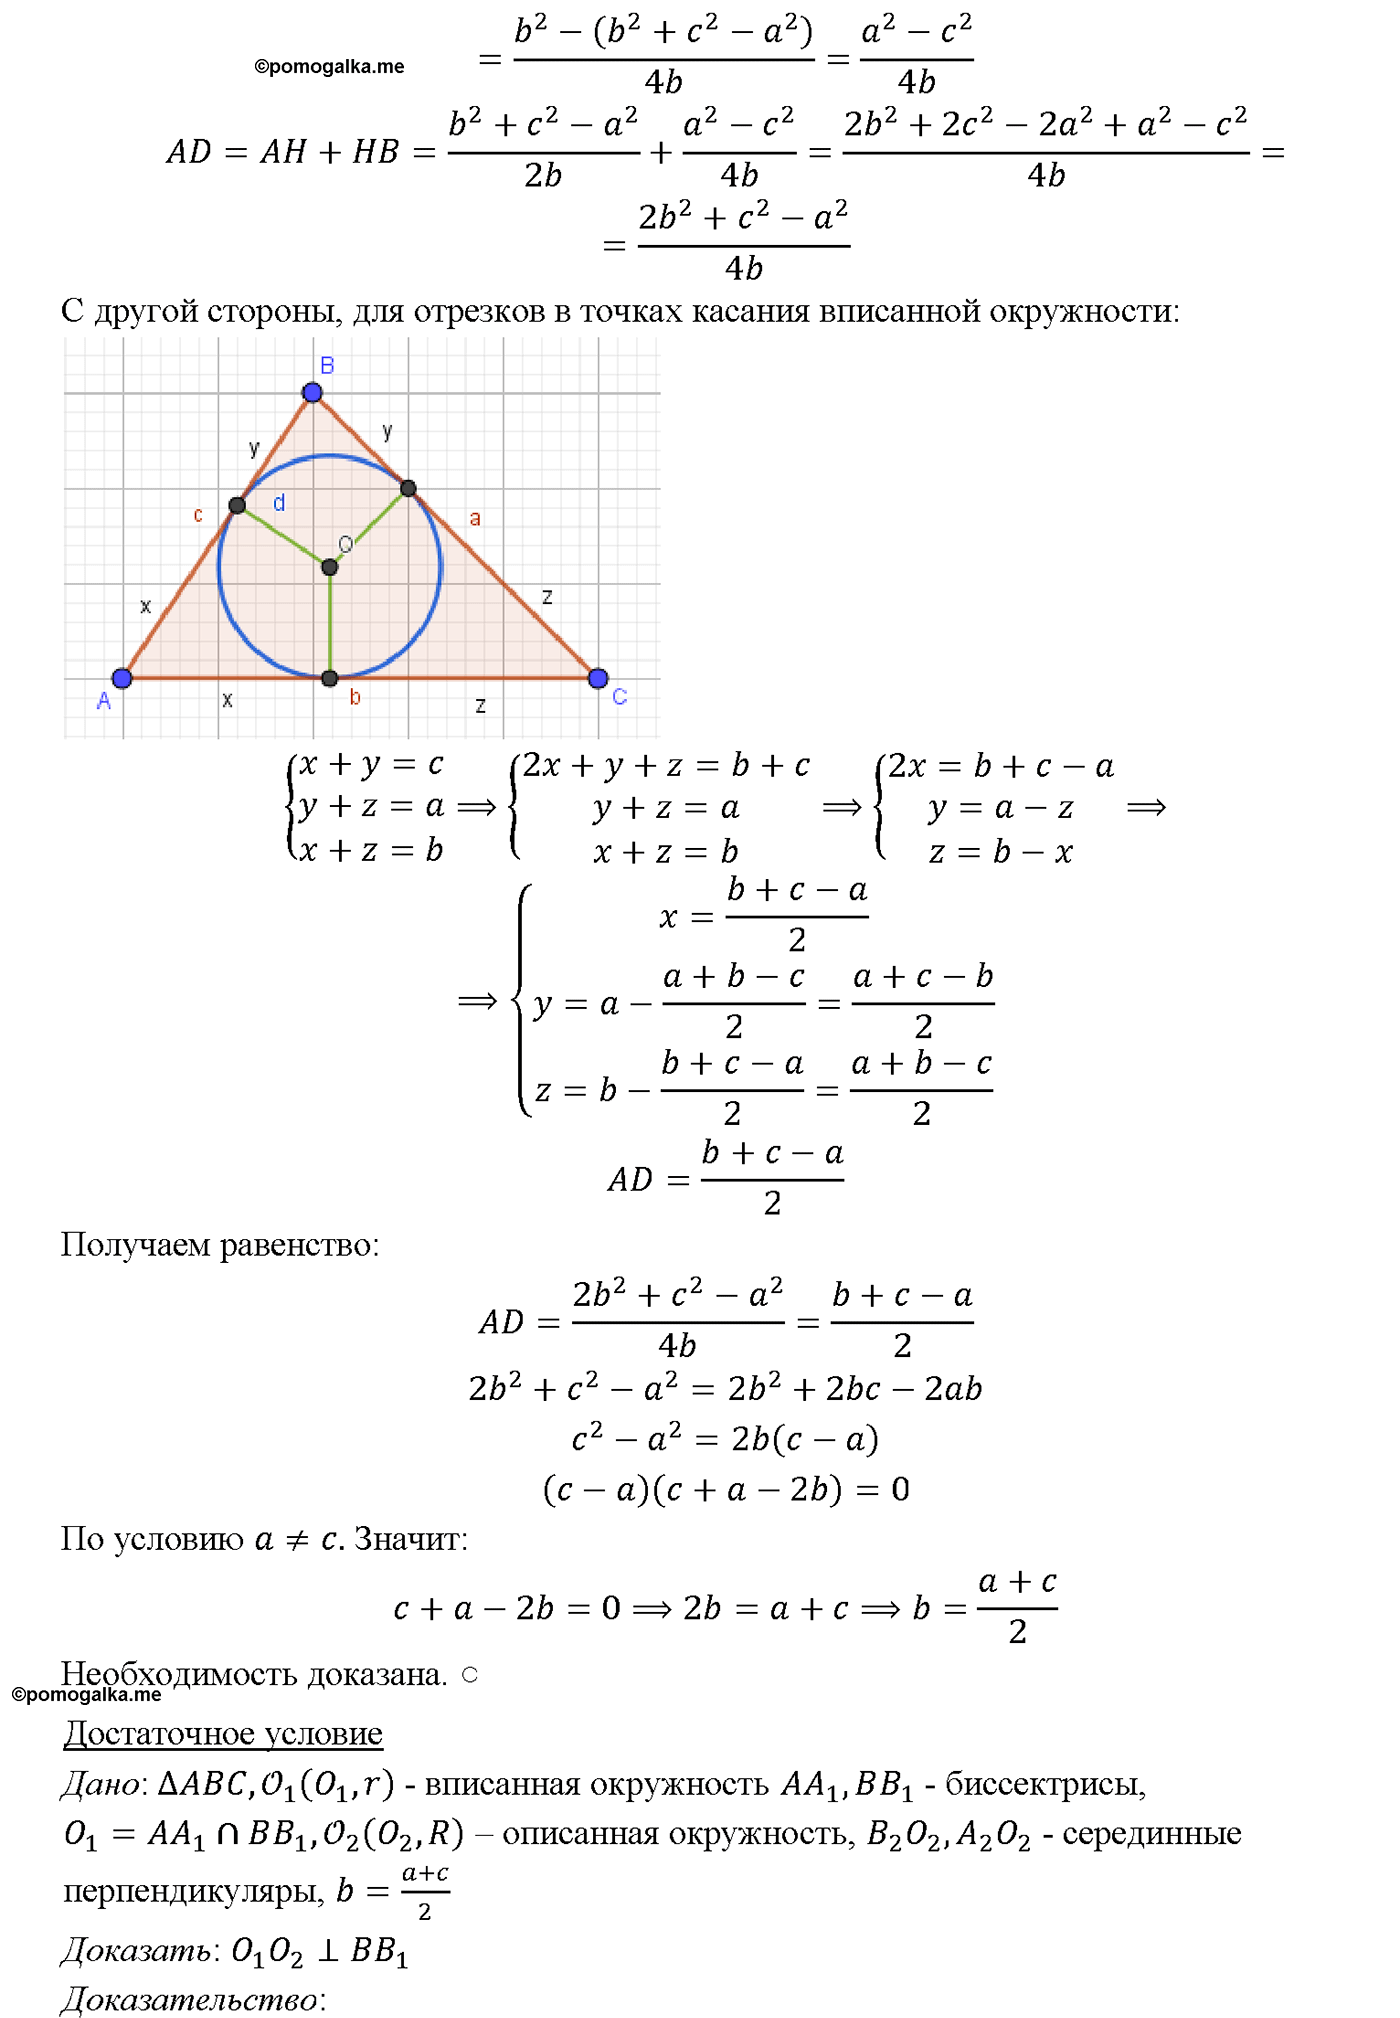 страница 331 номер 1275 геометрия 7-9 класс Атанасян учебник 2014 год